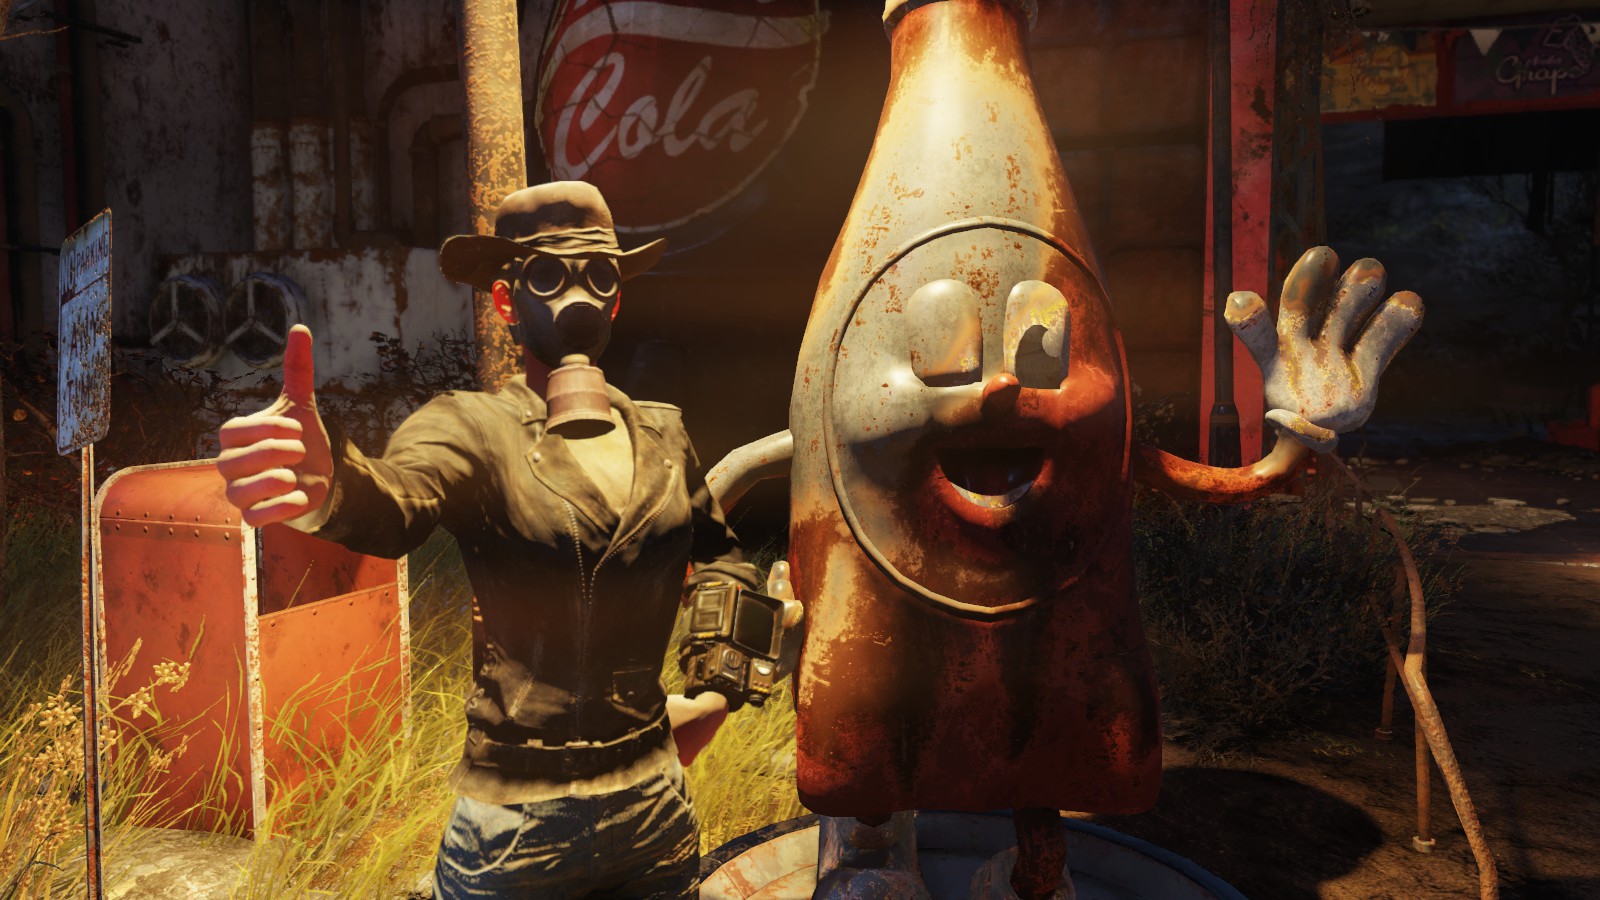 Fallout 76 Atomic Shop - Real World Money Shop Details - GameRevolution